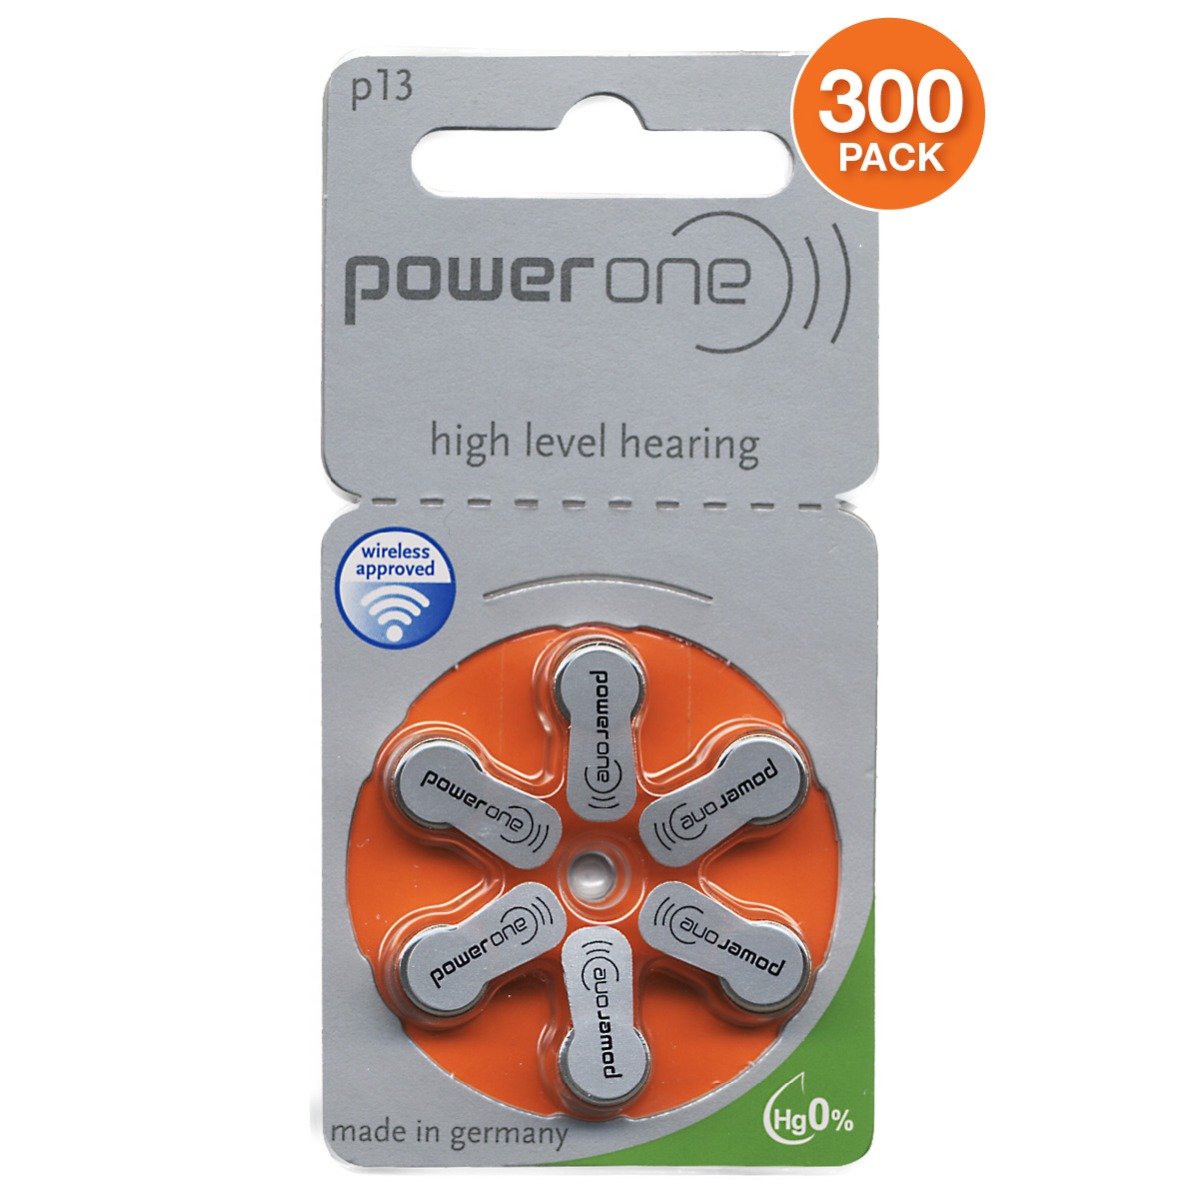 Power One Size P13 Hearing Aid Battery, Mercury-Free (300 Pcs.)